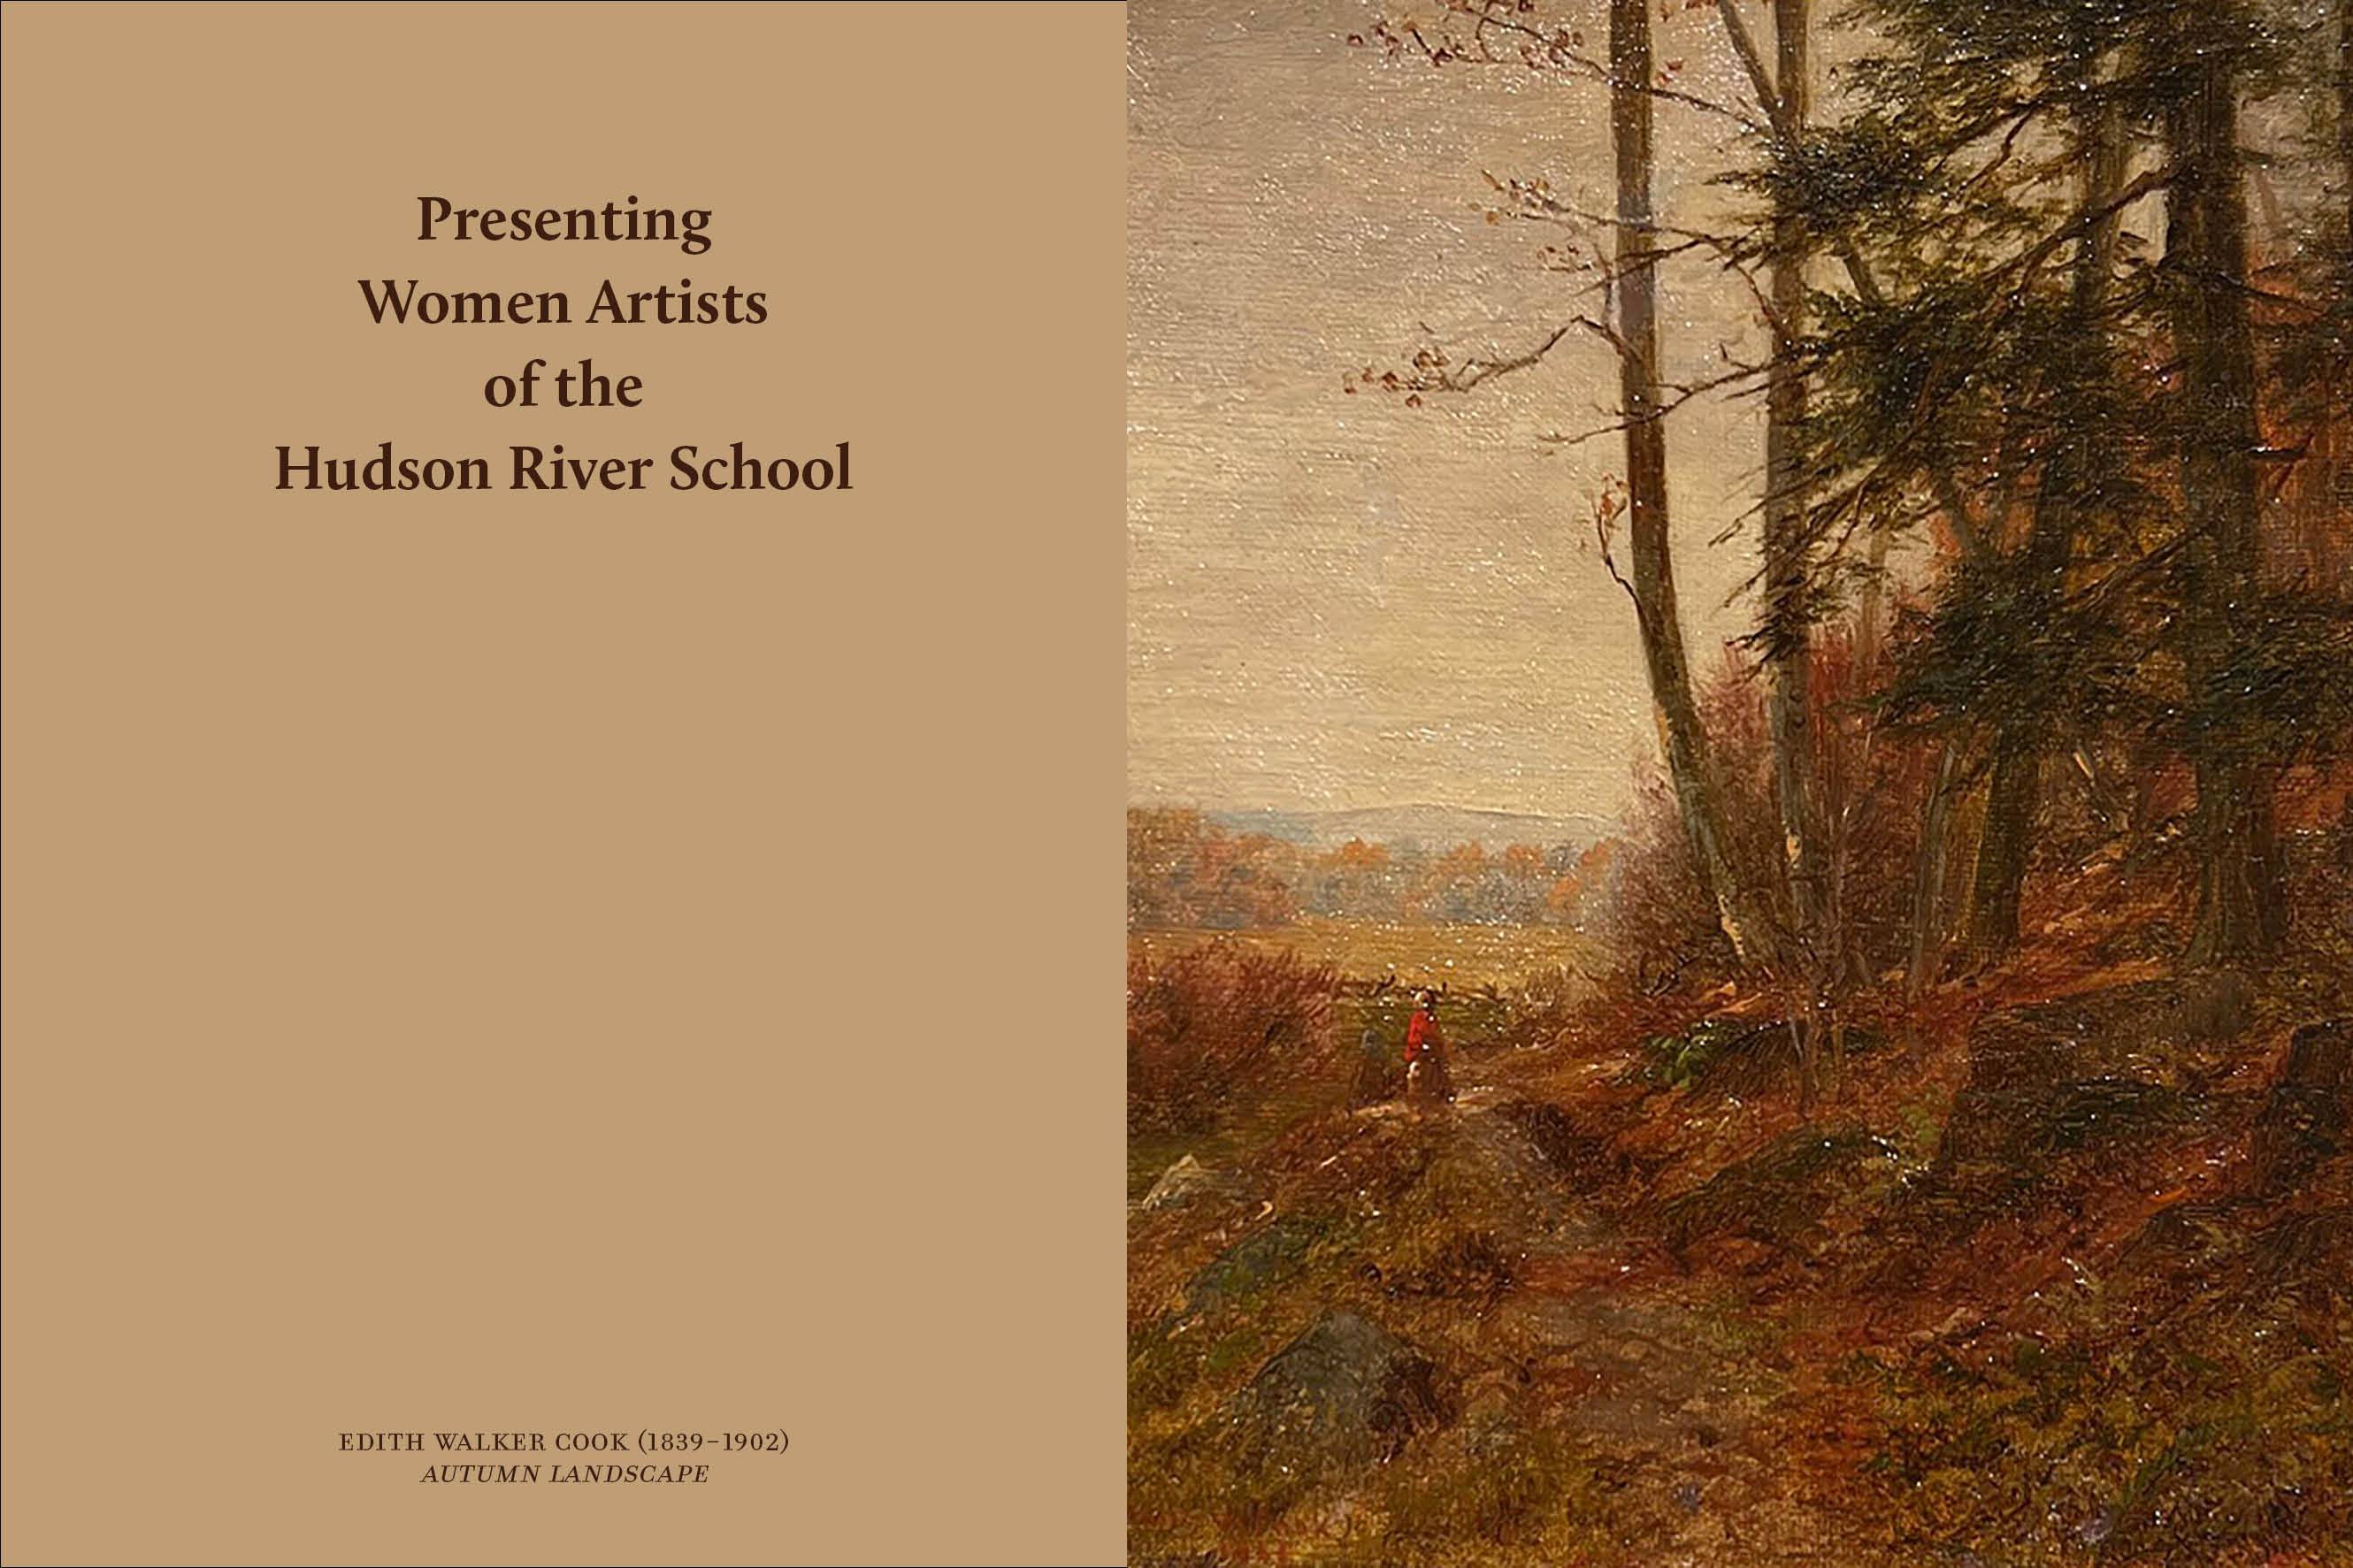 Presenting Women Artists of the Hudson River School